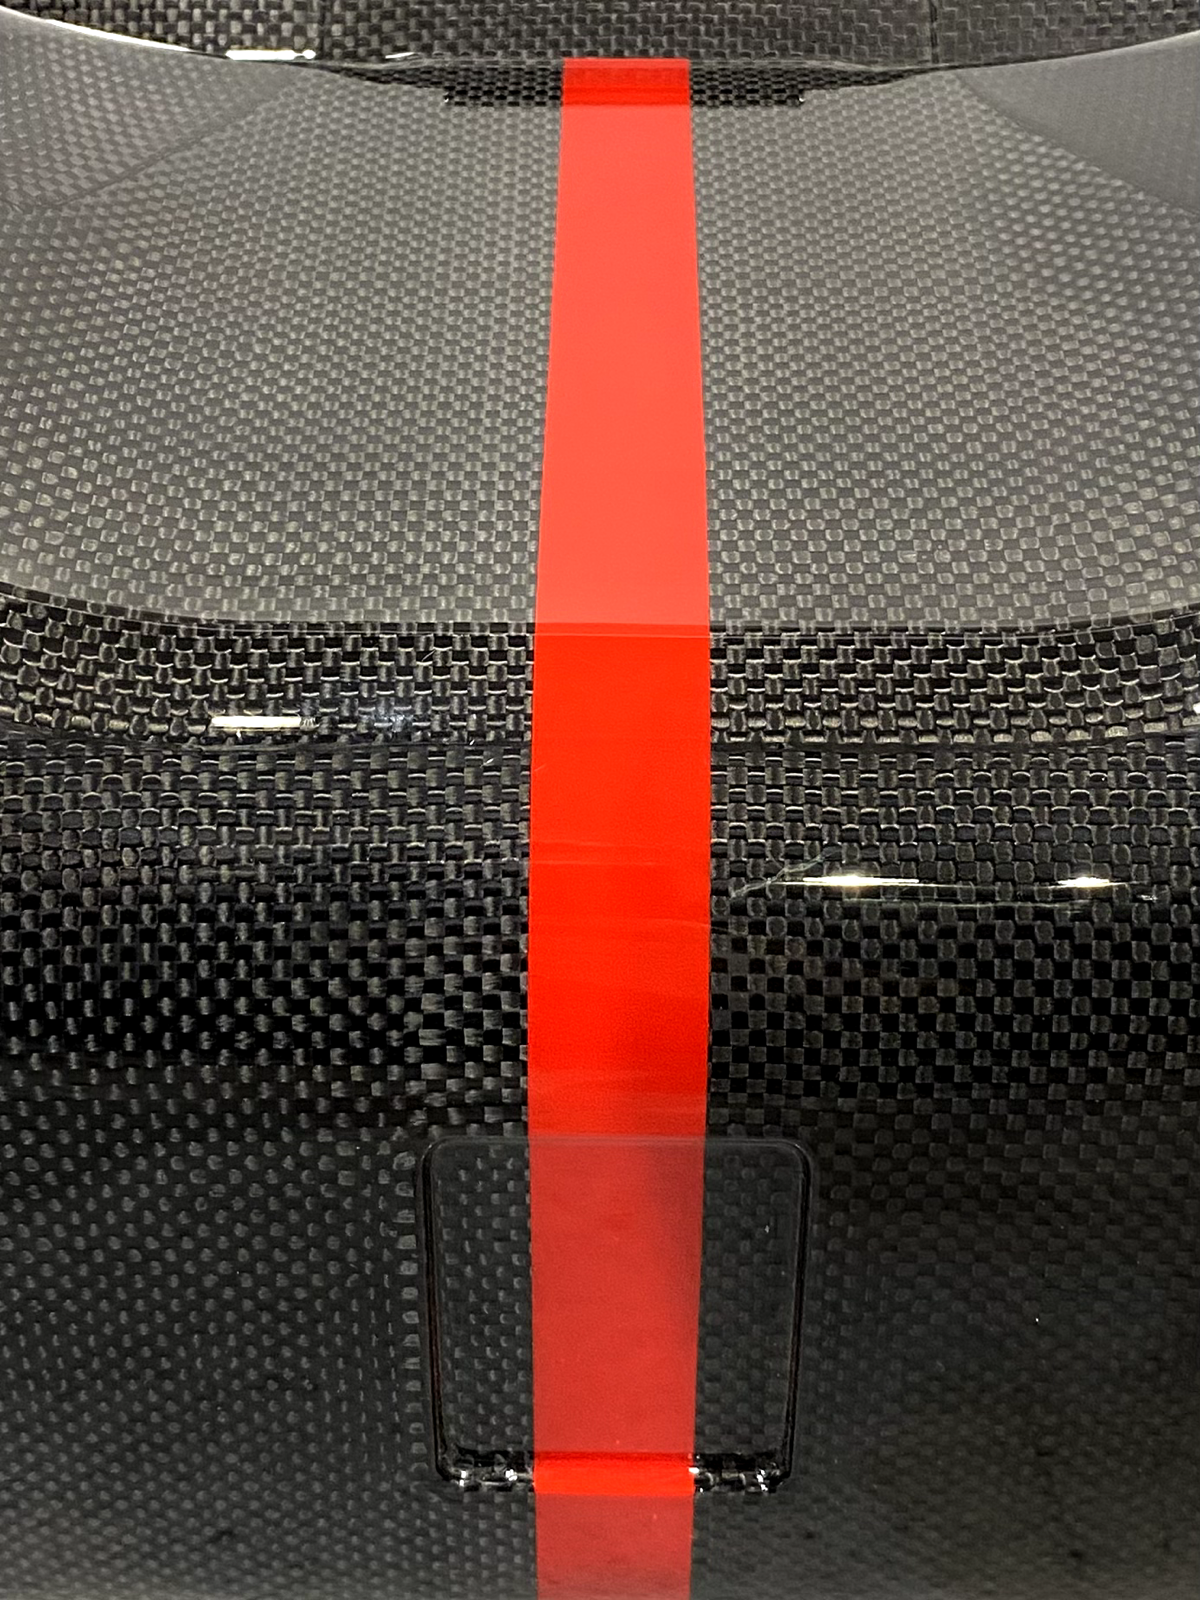 Ferrari 458 Speciale Air filter carbon box complete, OEM, Part number: 306065